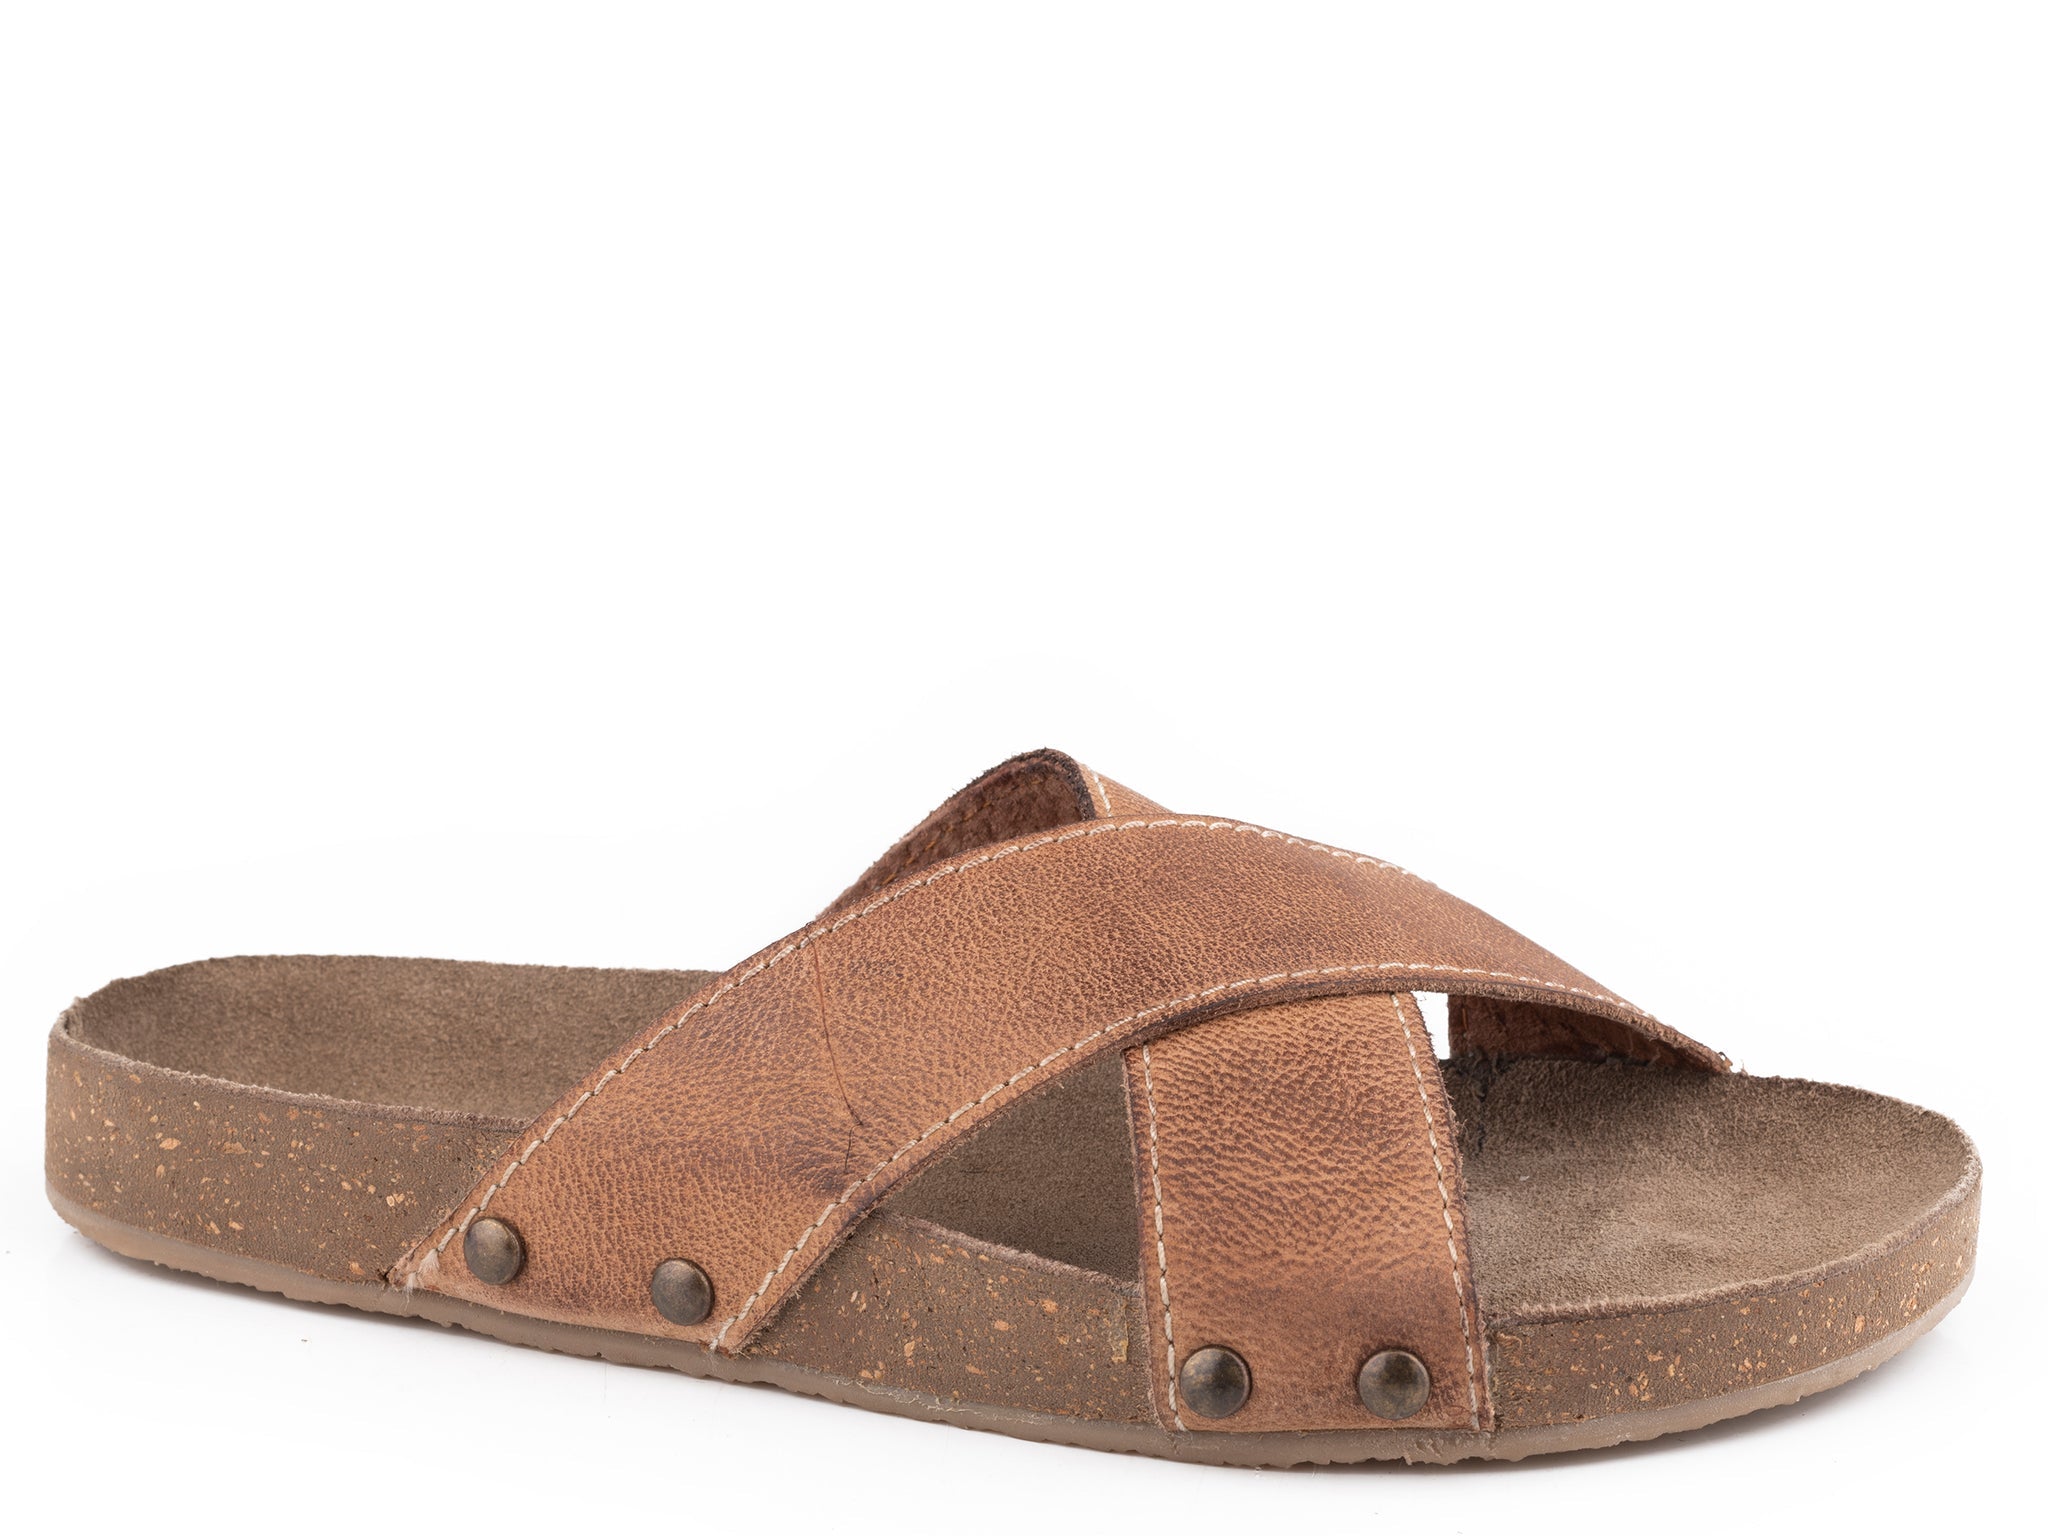 Roper Womens Tan Burnished Leather Shoe